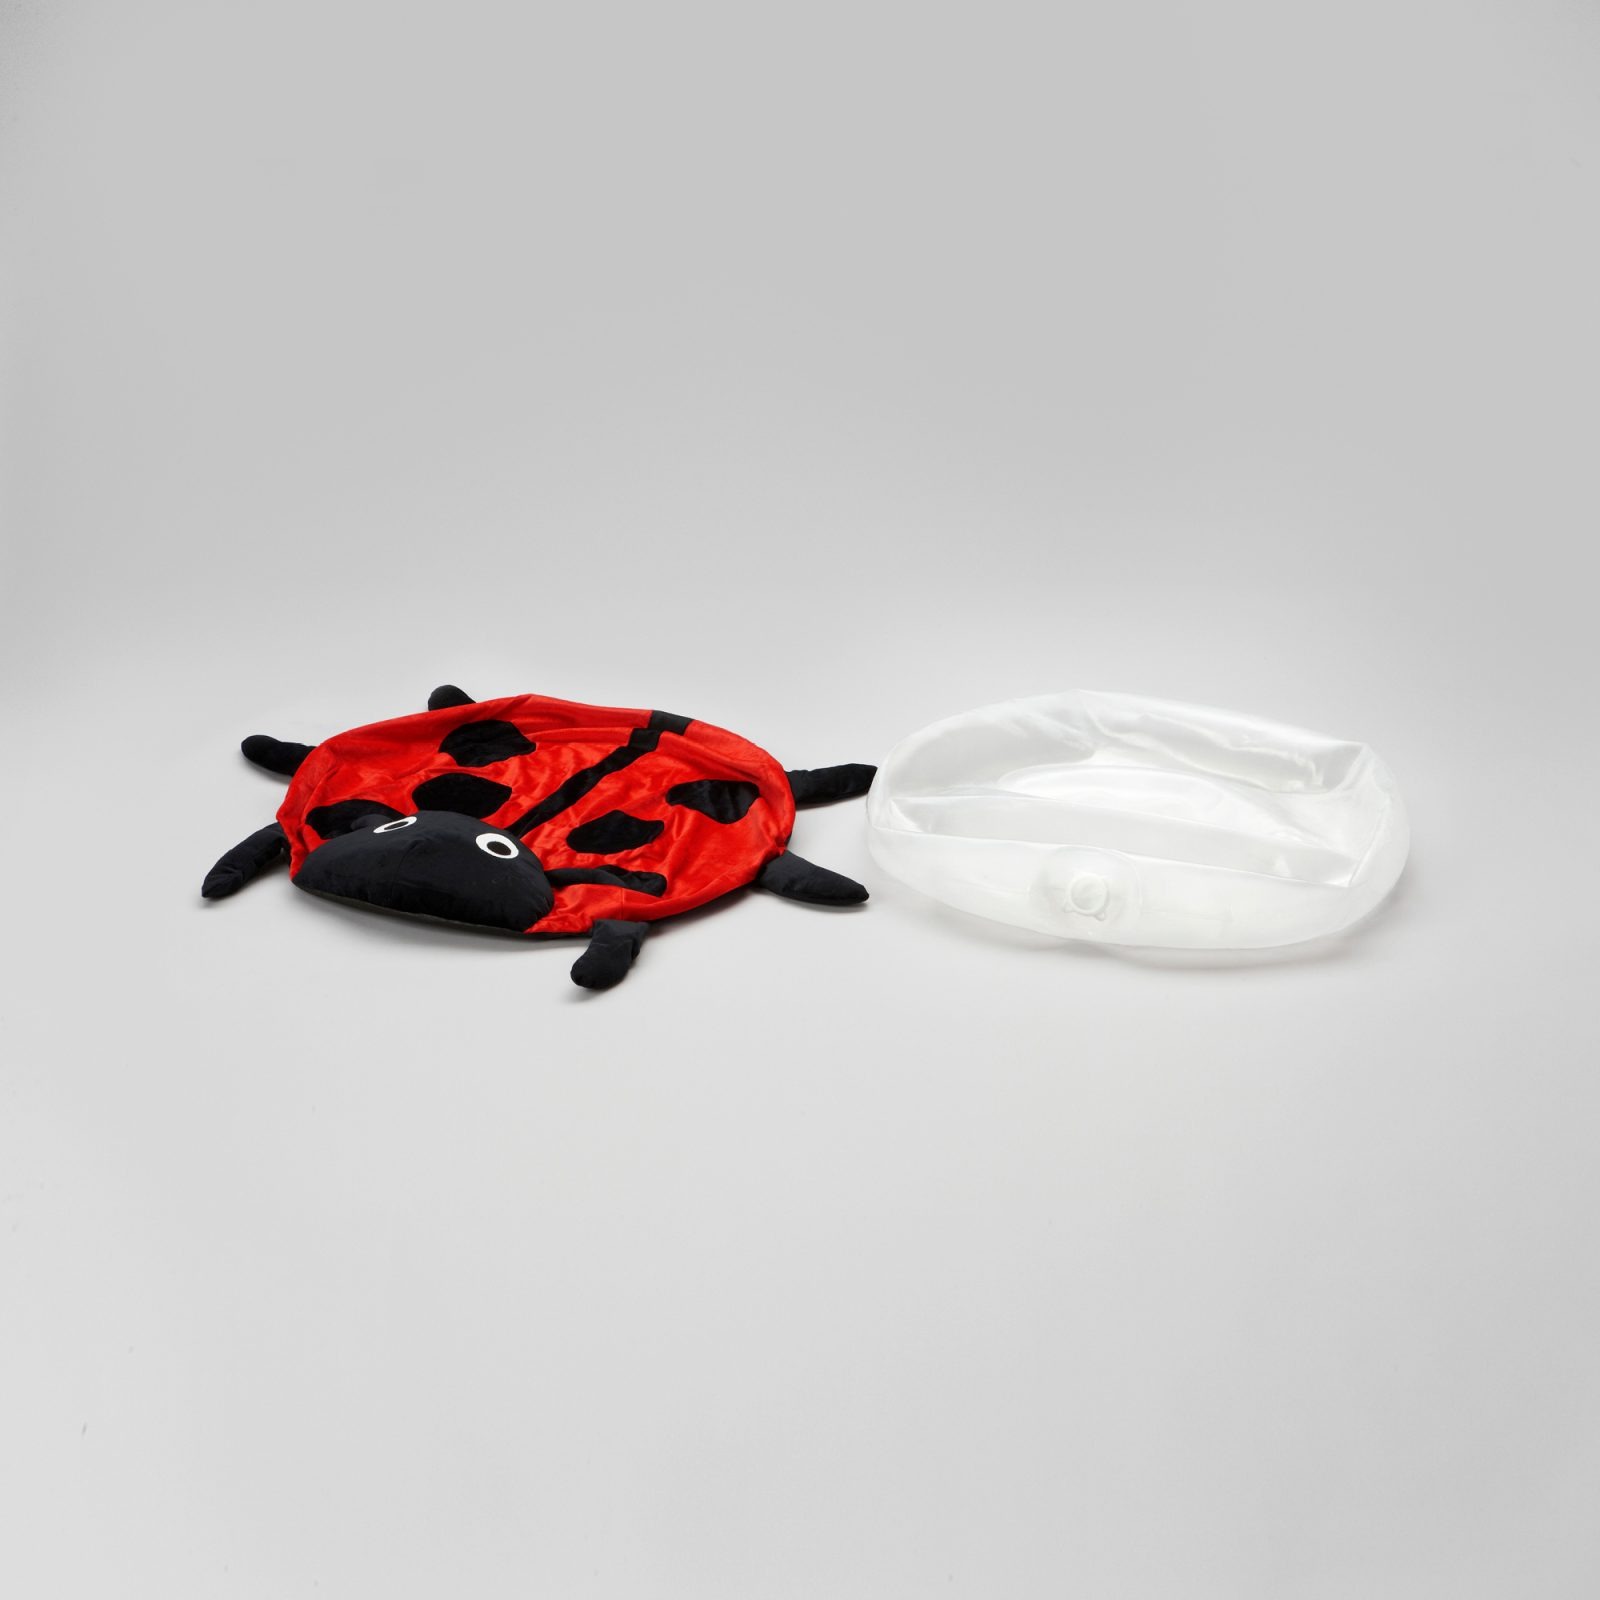 Pillow cover designed as a ladybird lies next to deflated plastic pillow.